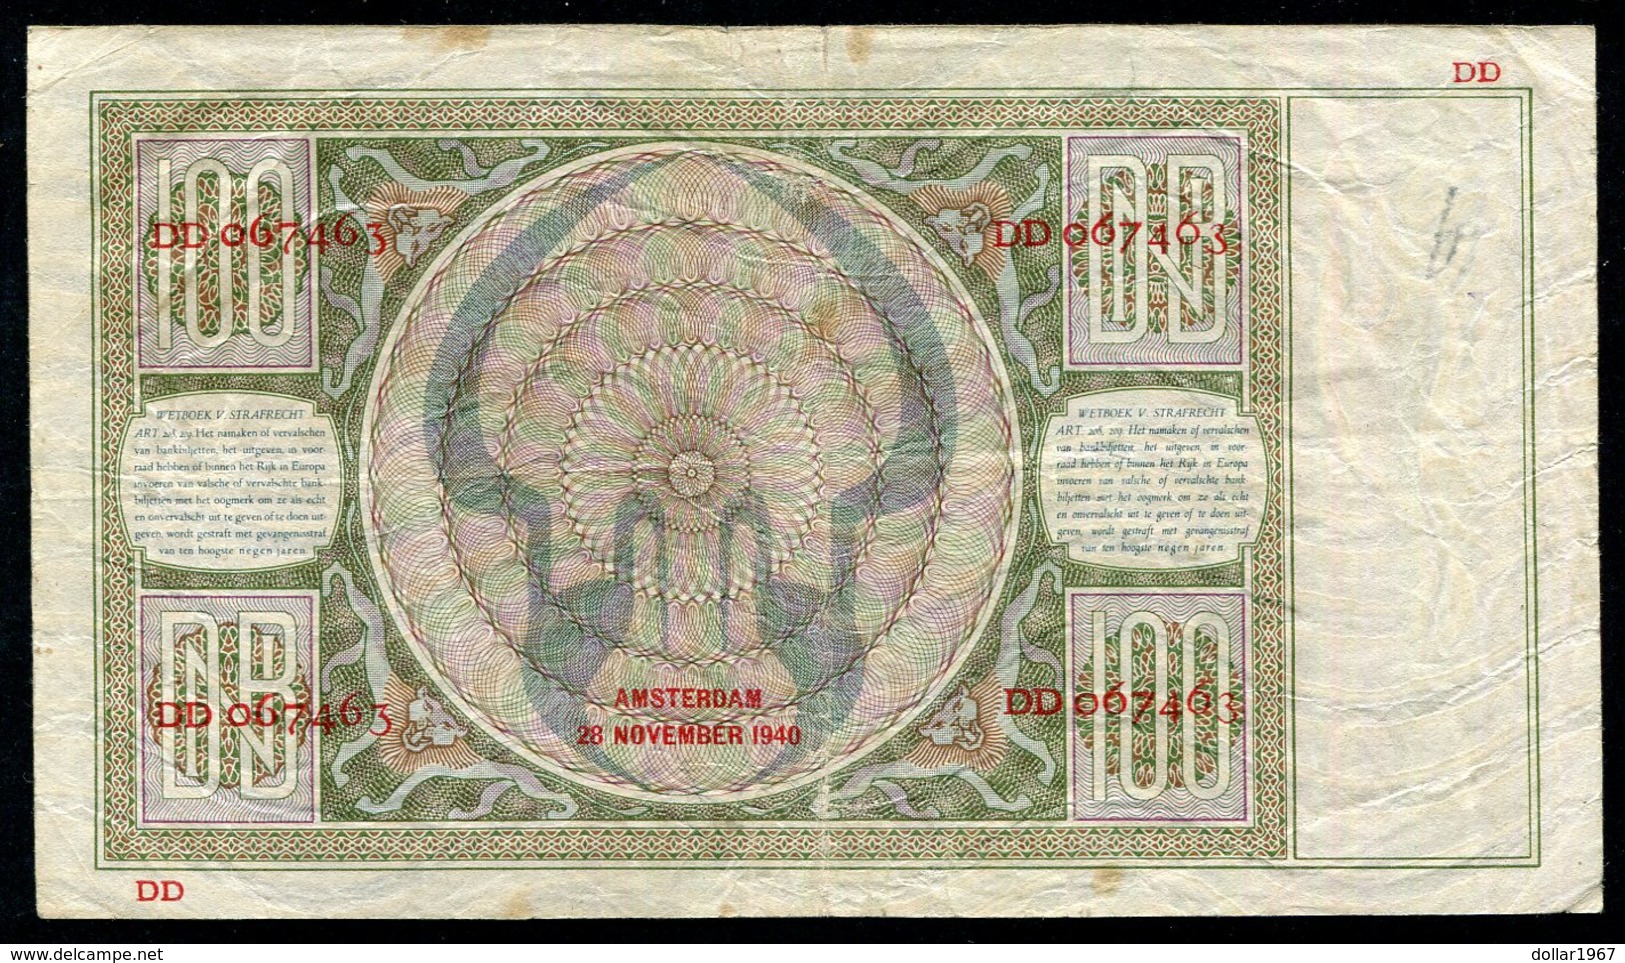 Netherlands  - 100 Gulden 1930 I 'Luitspelende Vrouw' / DD - See The 2 Scans For Condition.(Originalscan ) - [1] …-1815 : Avant Royaume